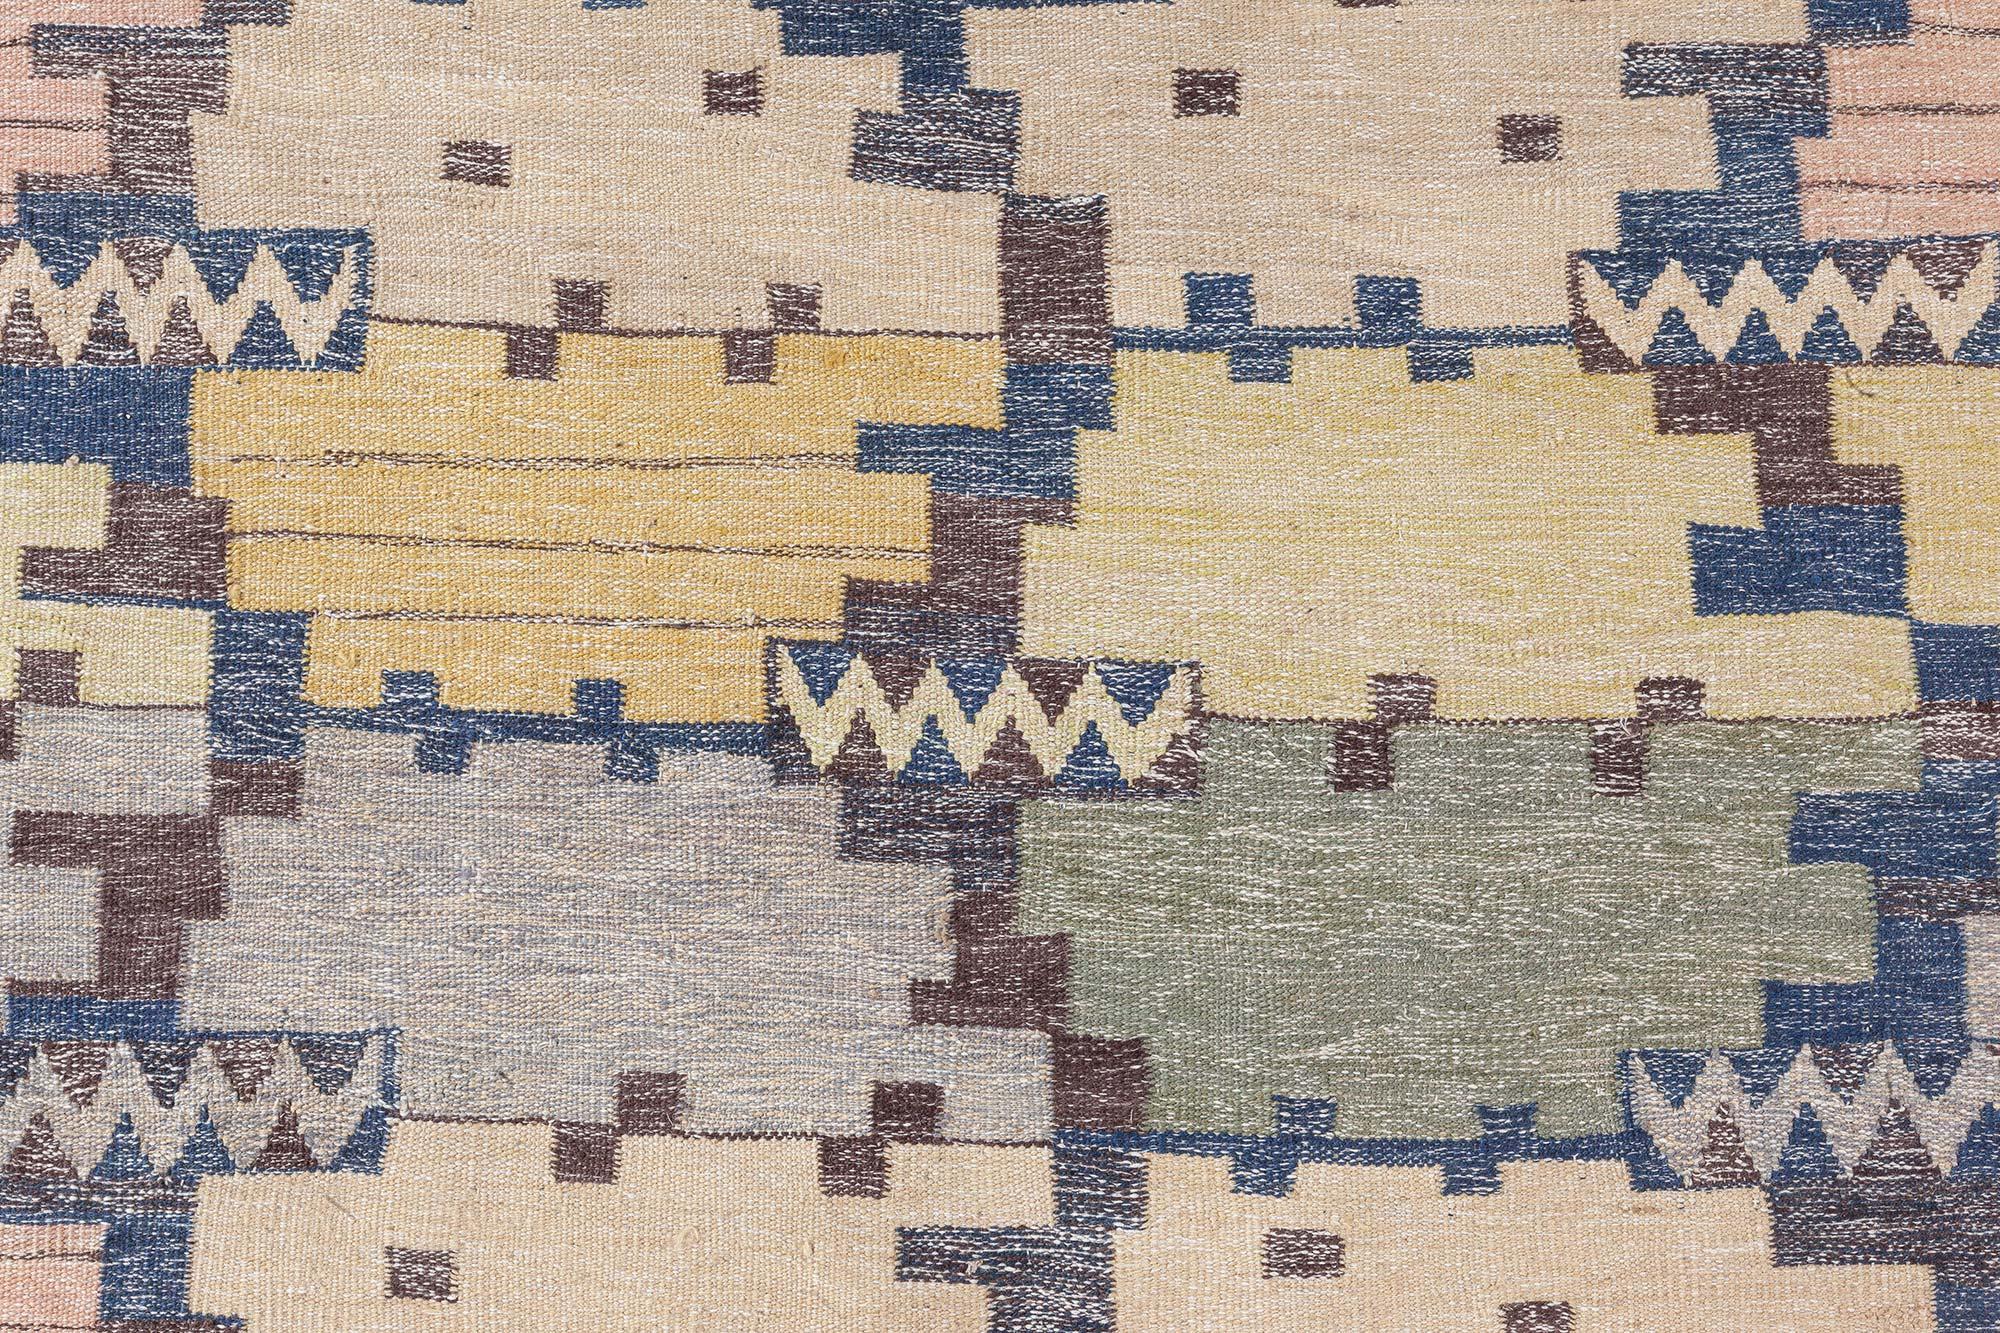 Modern Swedish Flat Weave Rug
Size: 10'6